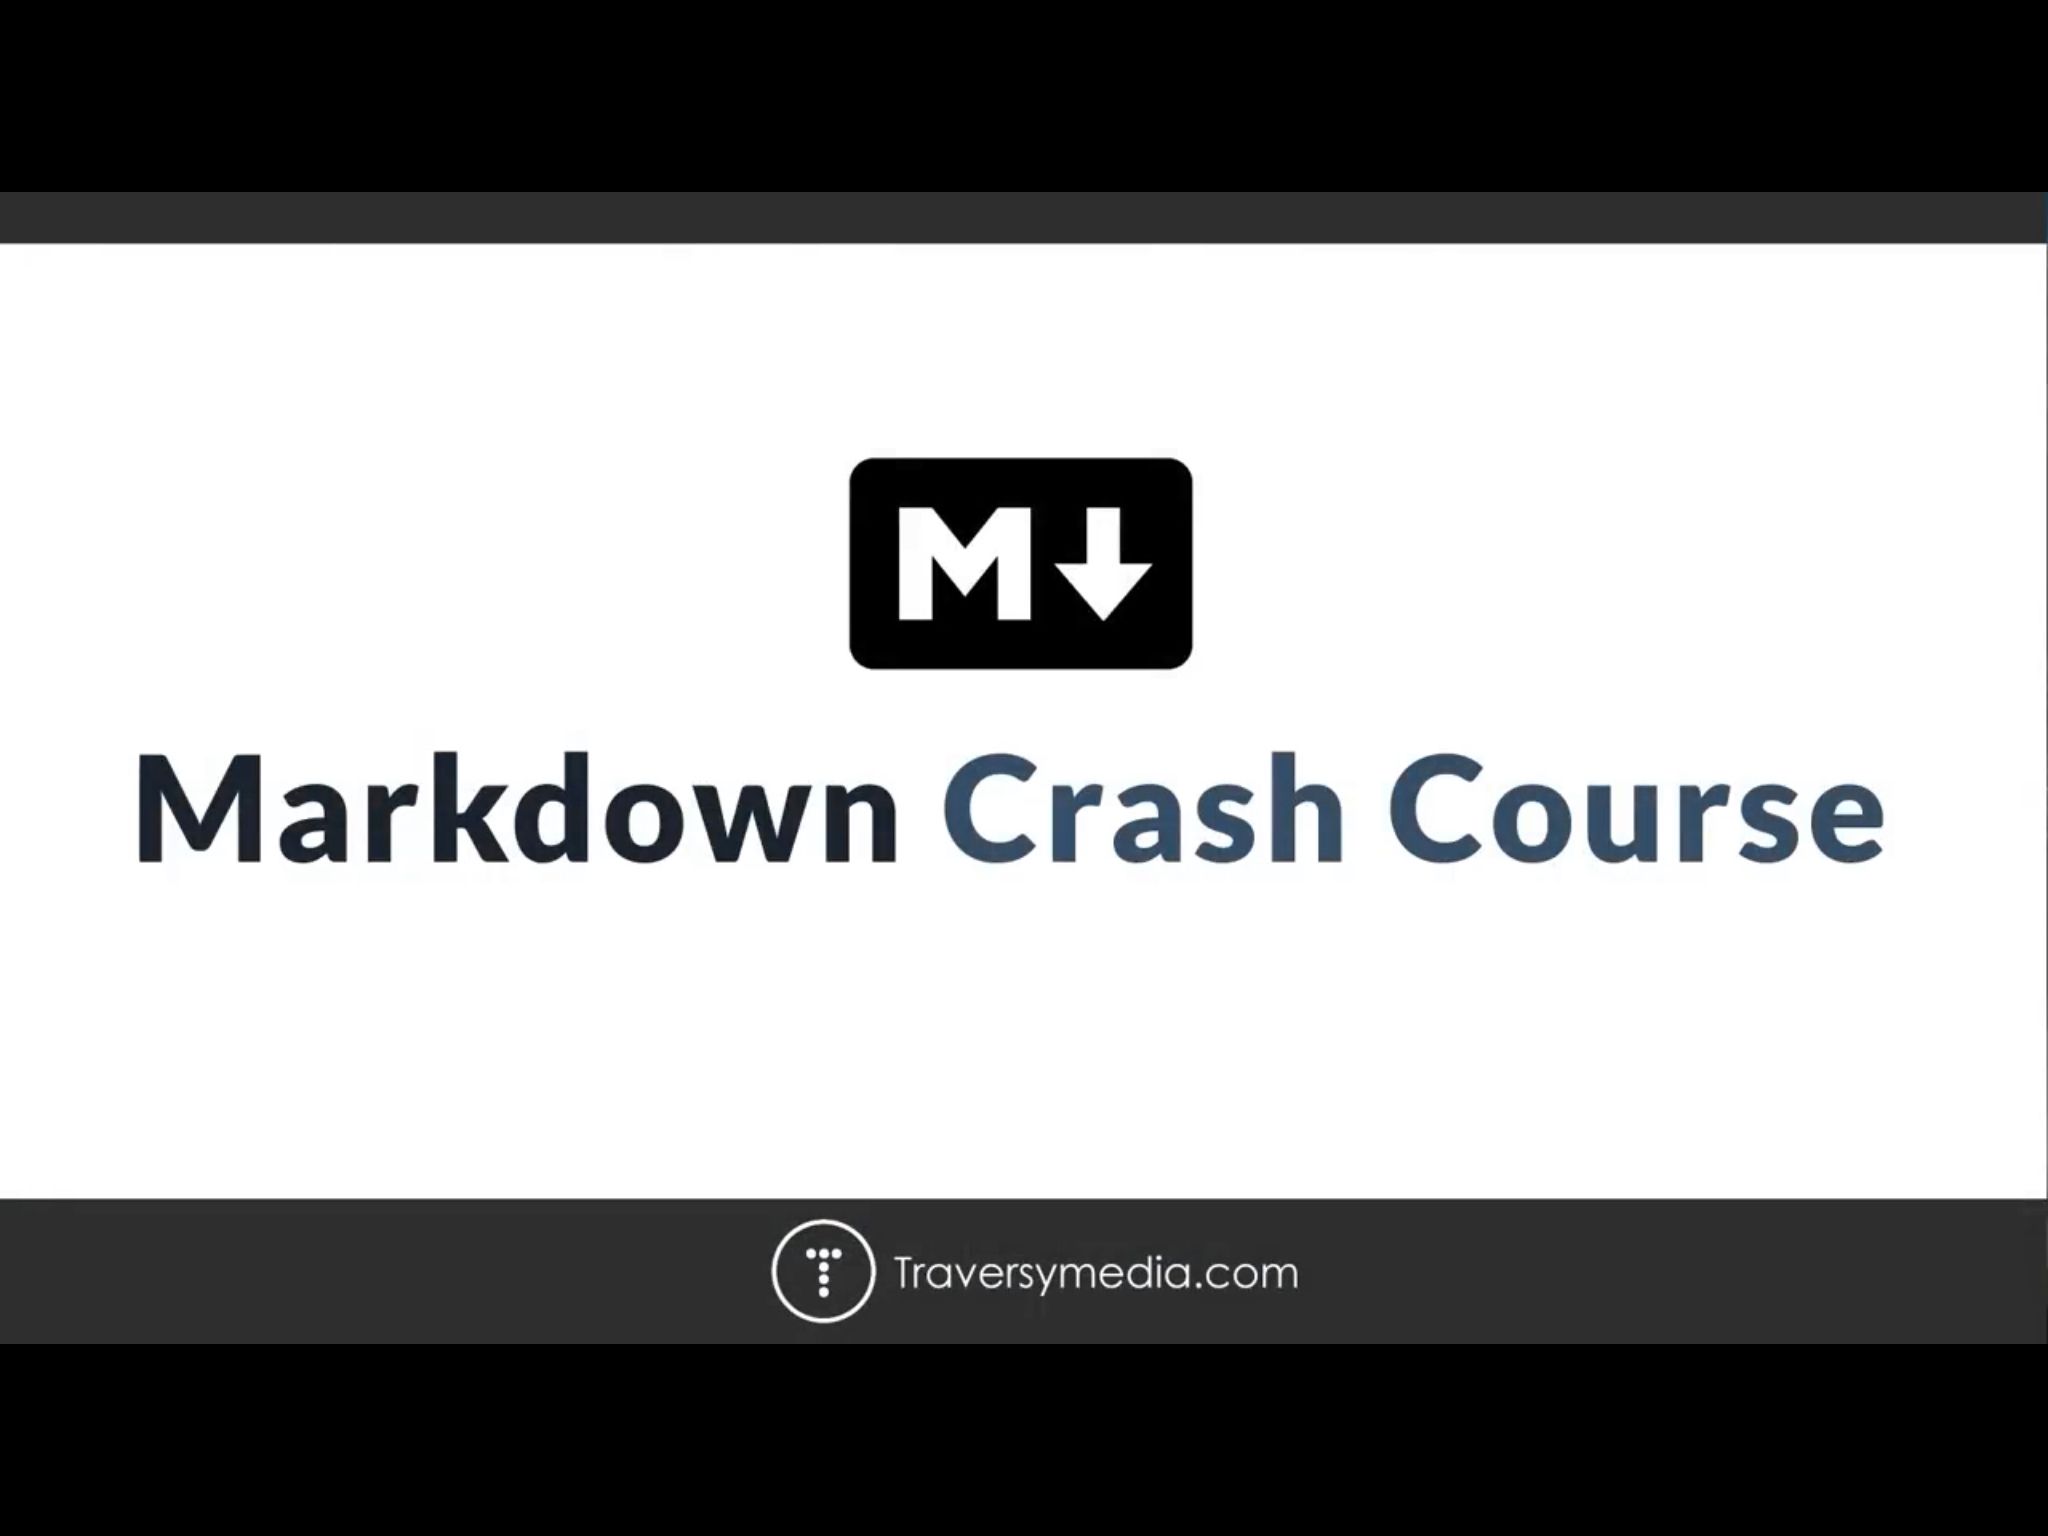 Markdown Crash Course Video by @traversymedia https://youtu.be/HUBNt18RFbo